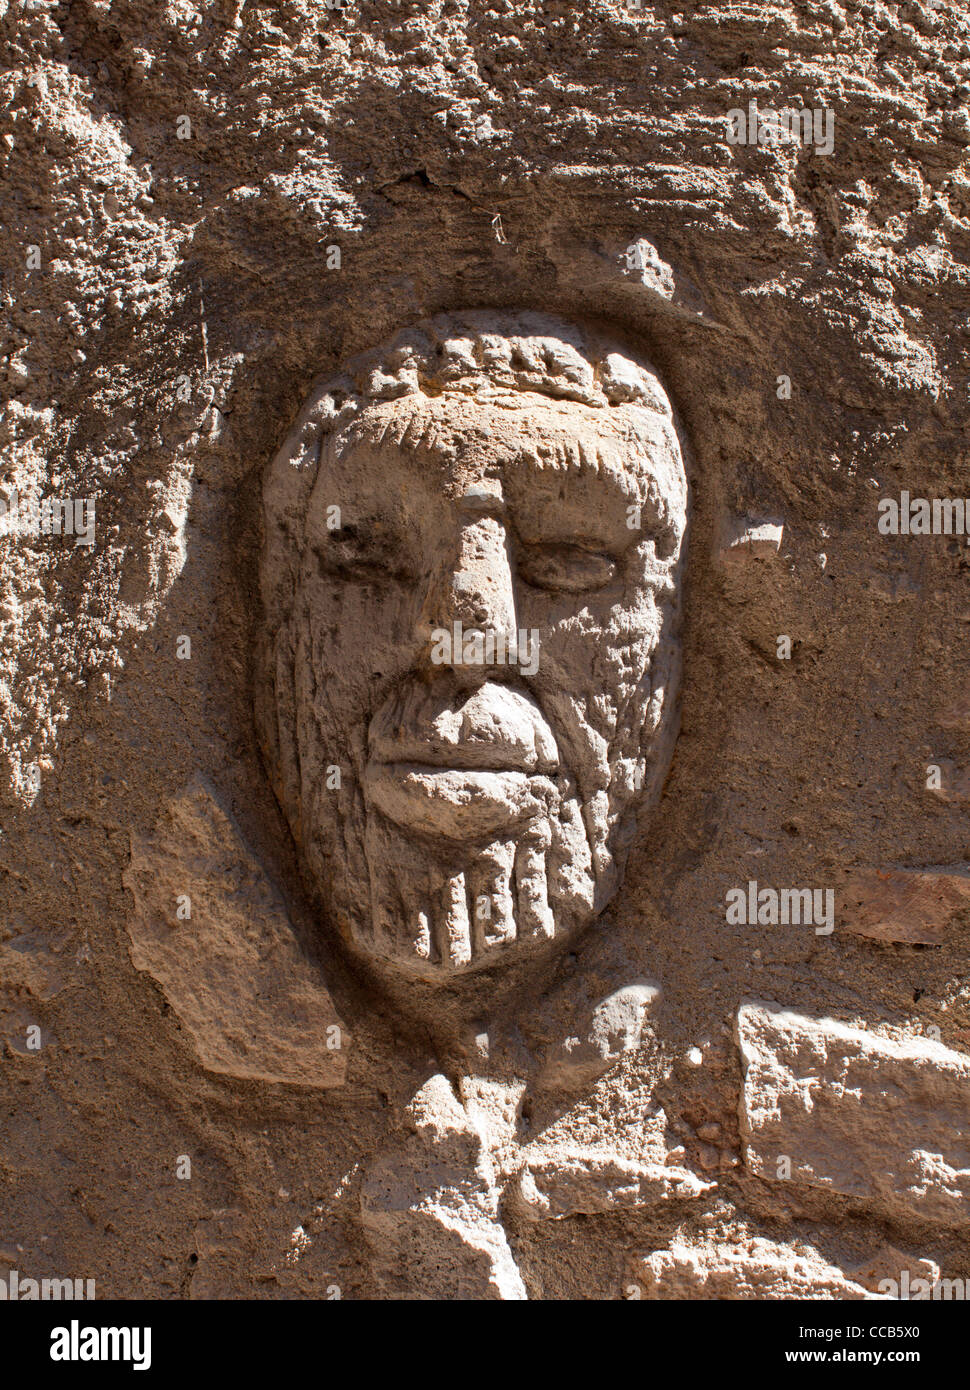 A human face sculpted into a wall. Bolsena, Italy. Stock Photo